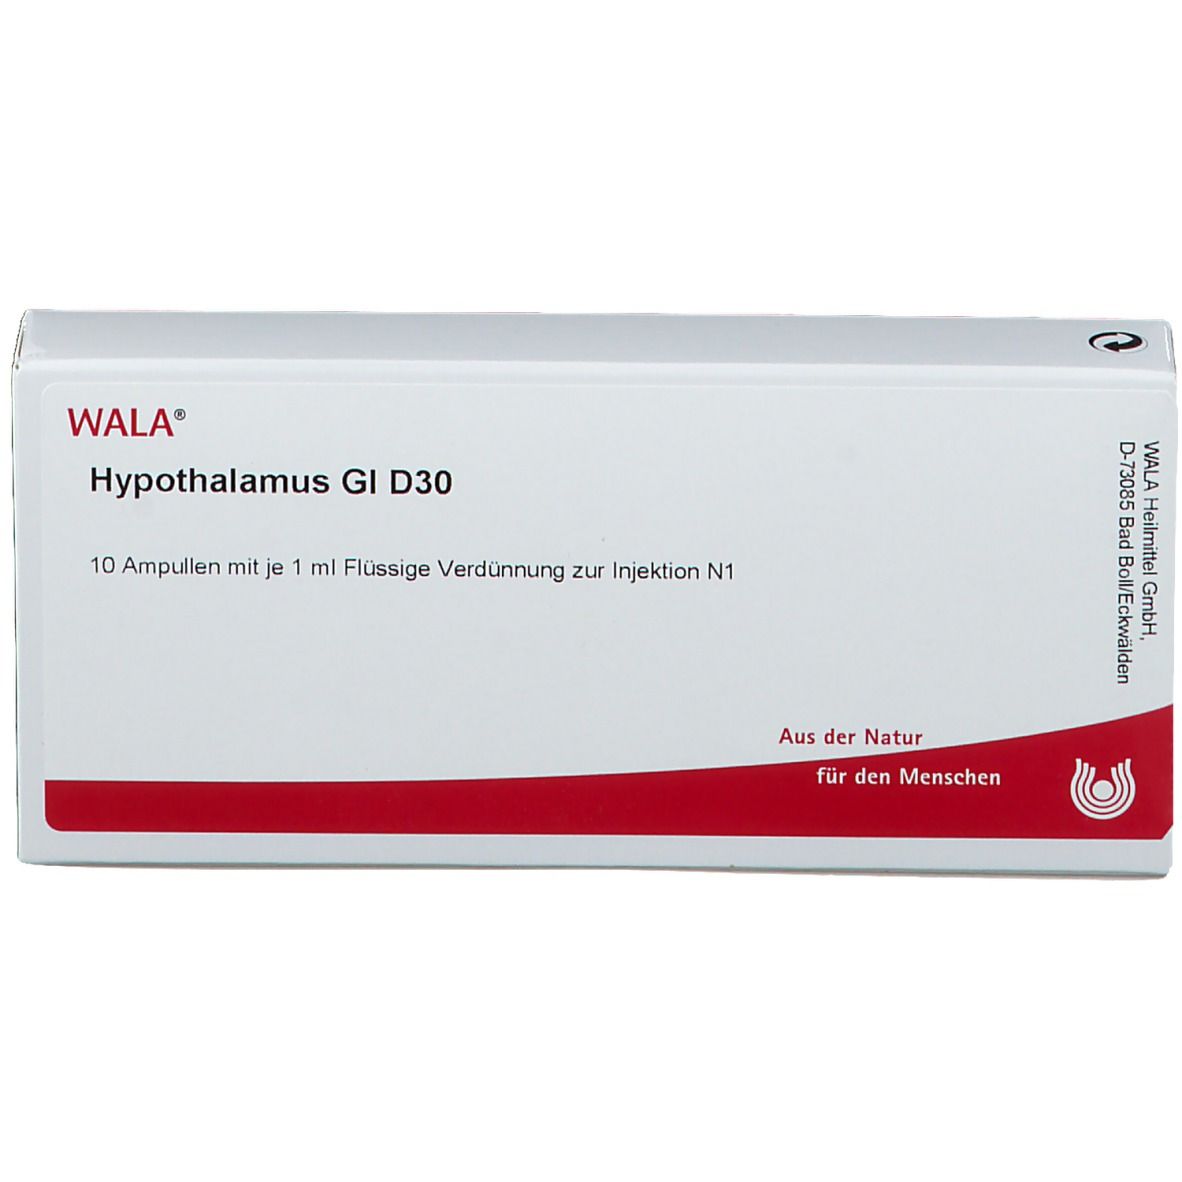 WALA® Hypothalamus Gl D 30